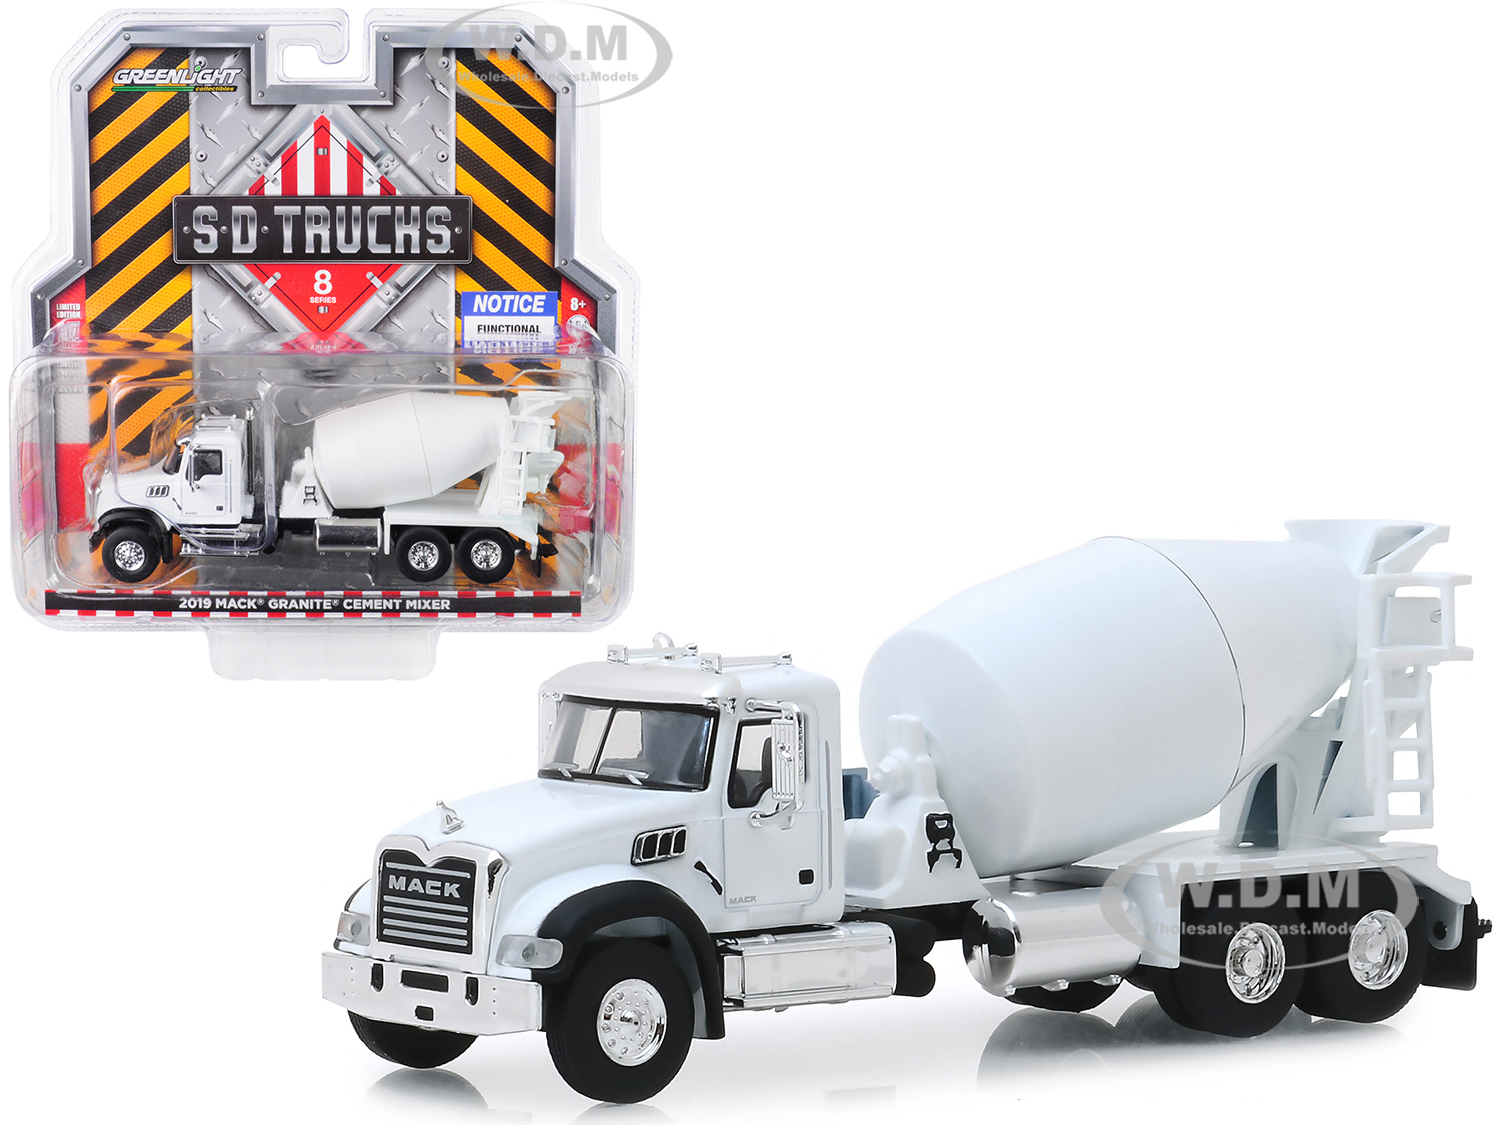 2019 Mack Granite Cement Mixer White "s.d. Trucks" Series 8 1/64 Diecast Model By Greenlight